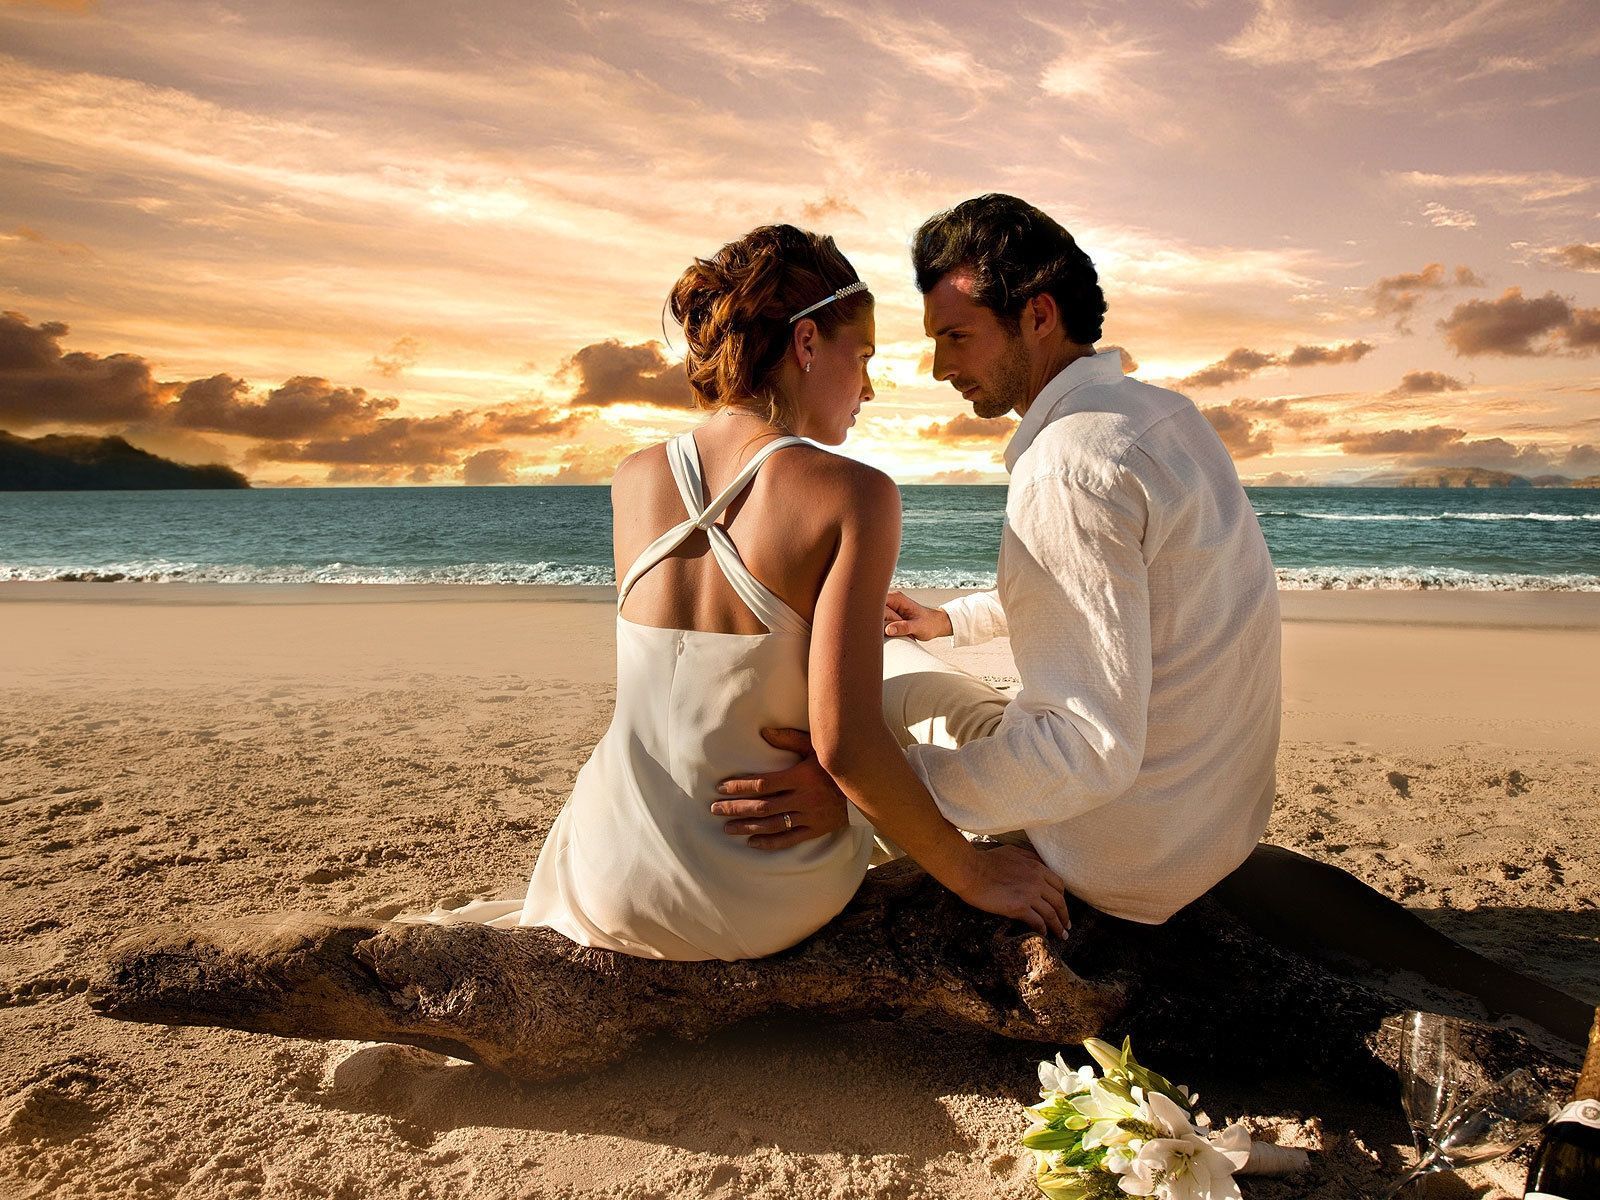 Romantic Love Couple HD Wallpaper. Romantic beach wedding, Beach wedding photo, Love couple wallpaper